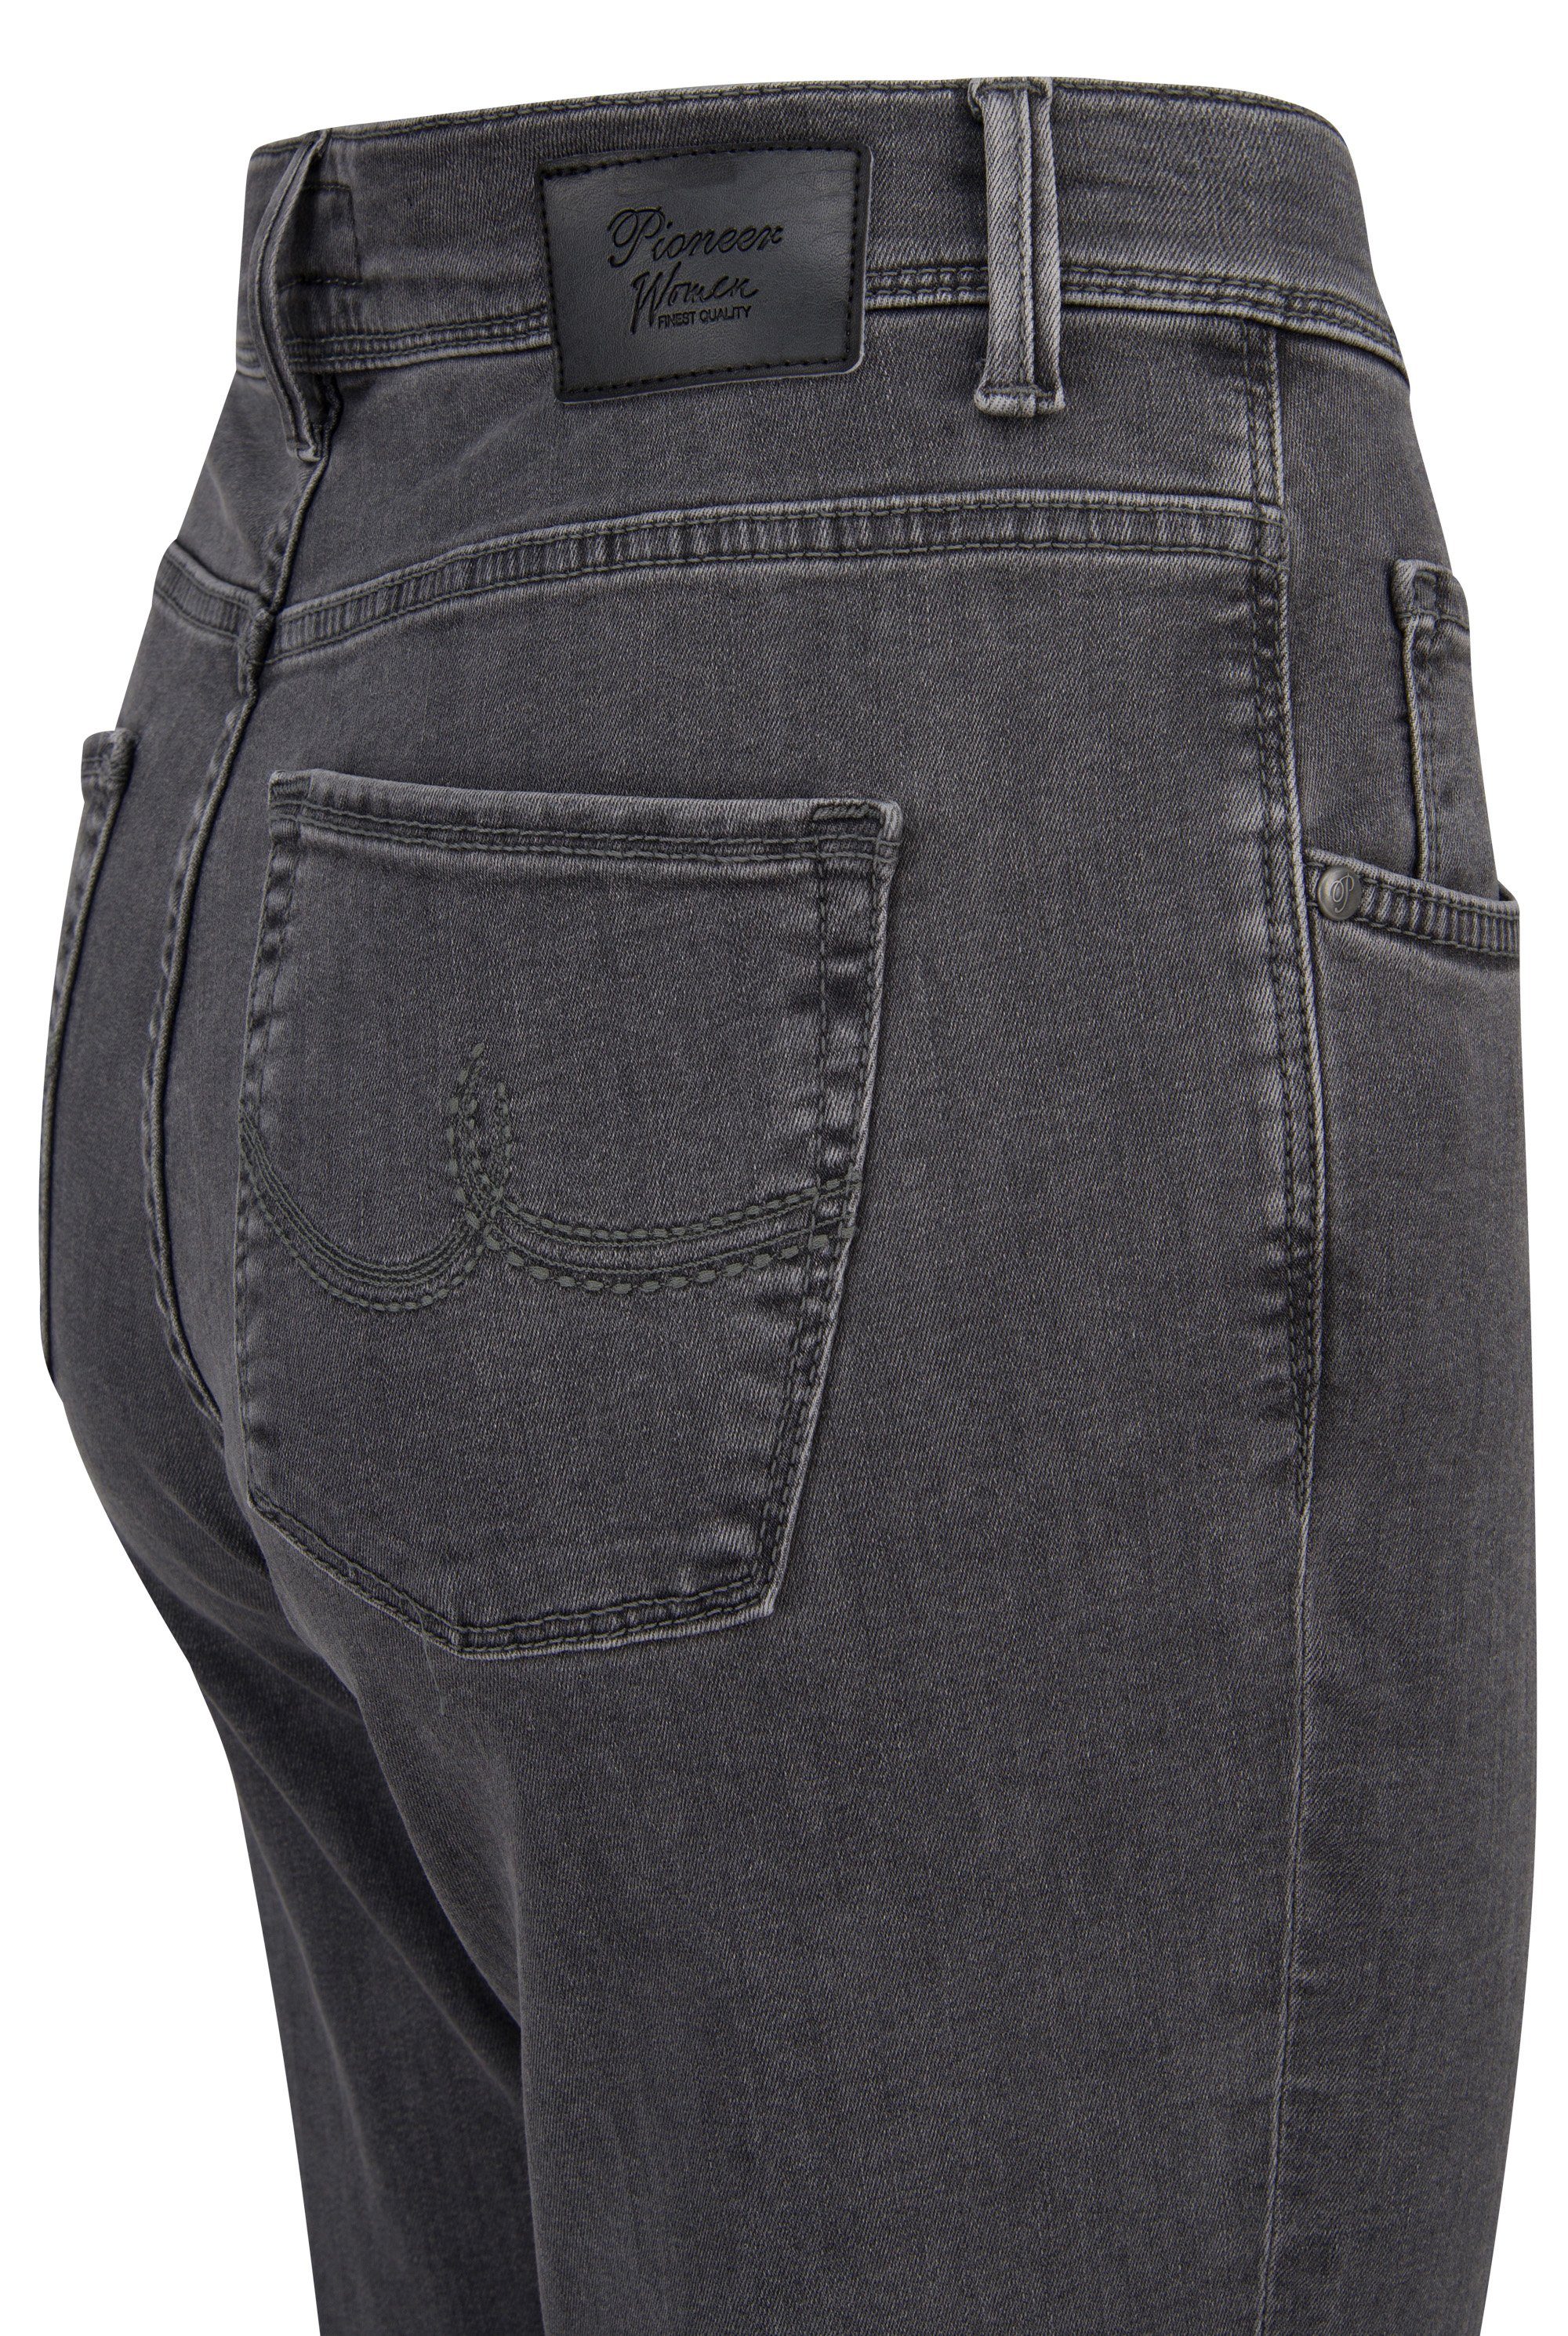 Stretch-Jeans grey POWERSTRETCH Authentic Pioneer BETTY PIONEER stonewash 4012 - 3098.9831 Jeans